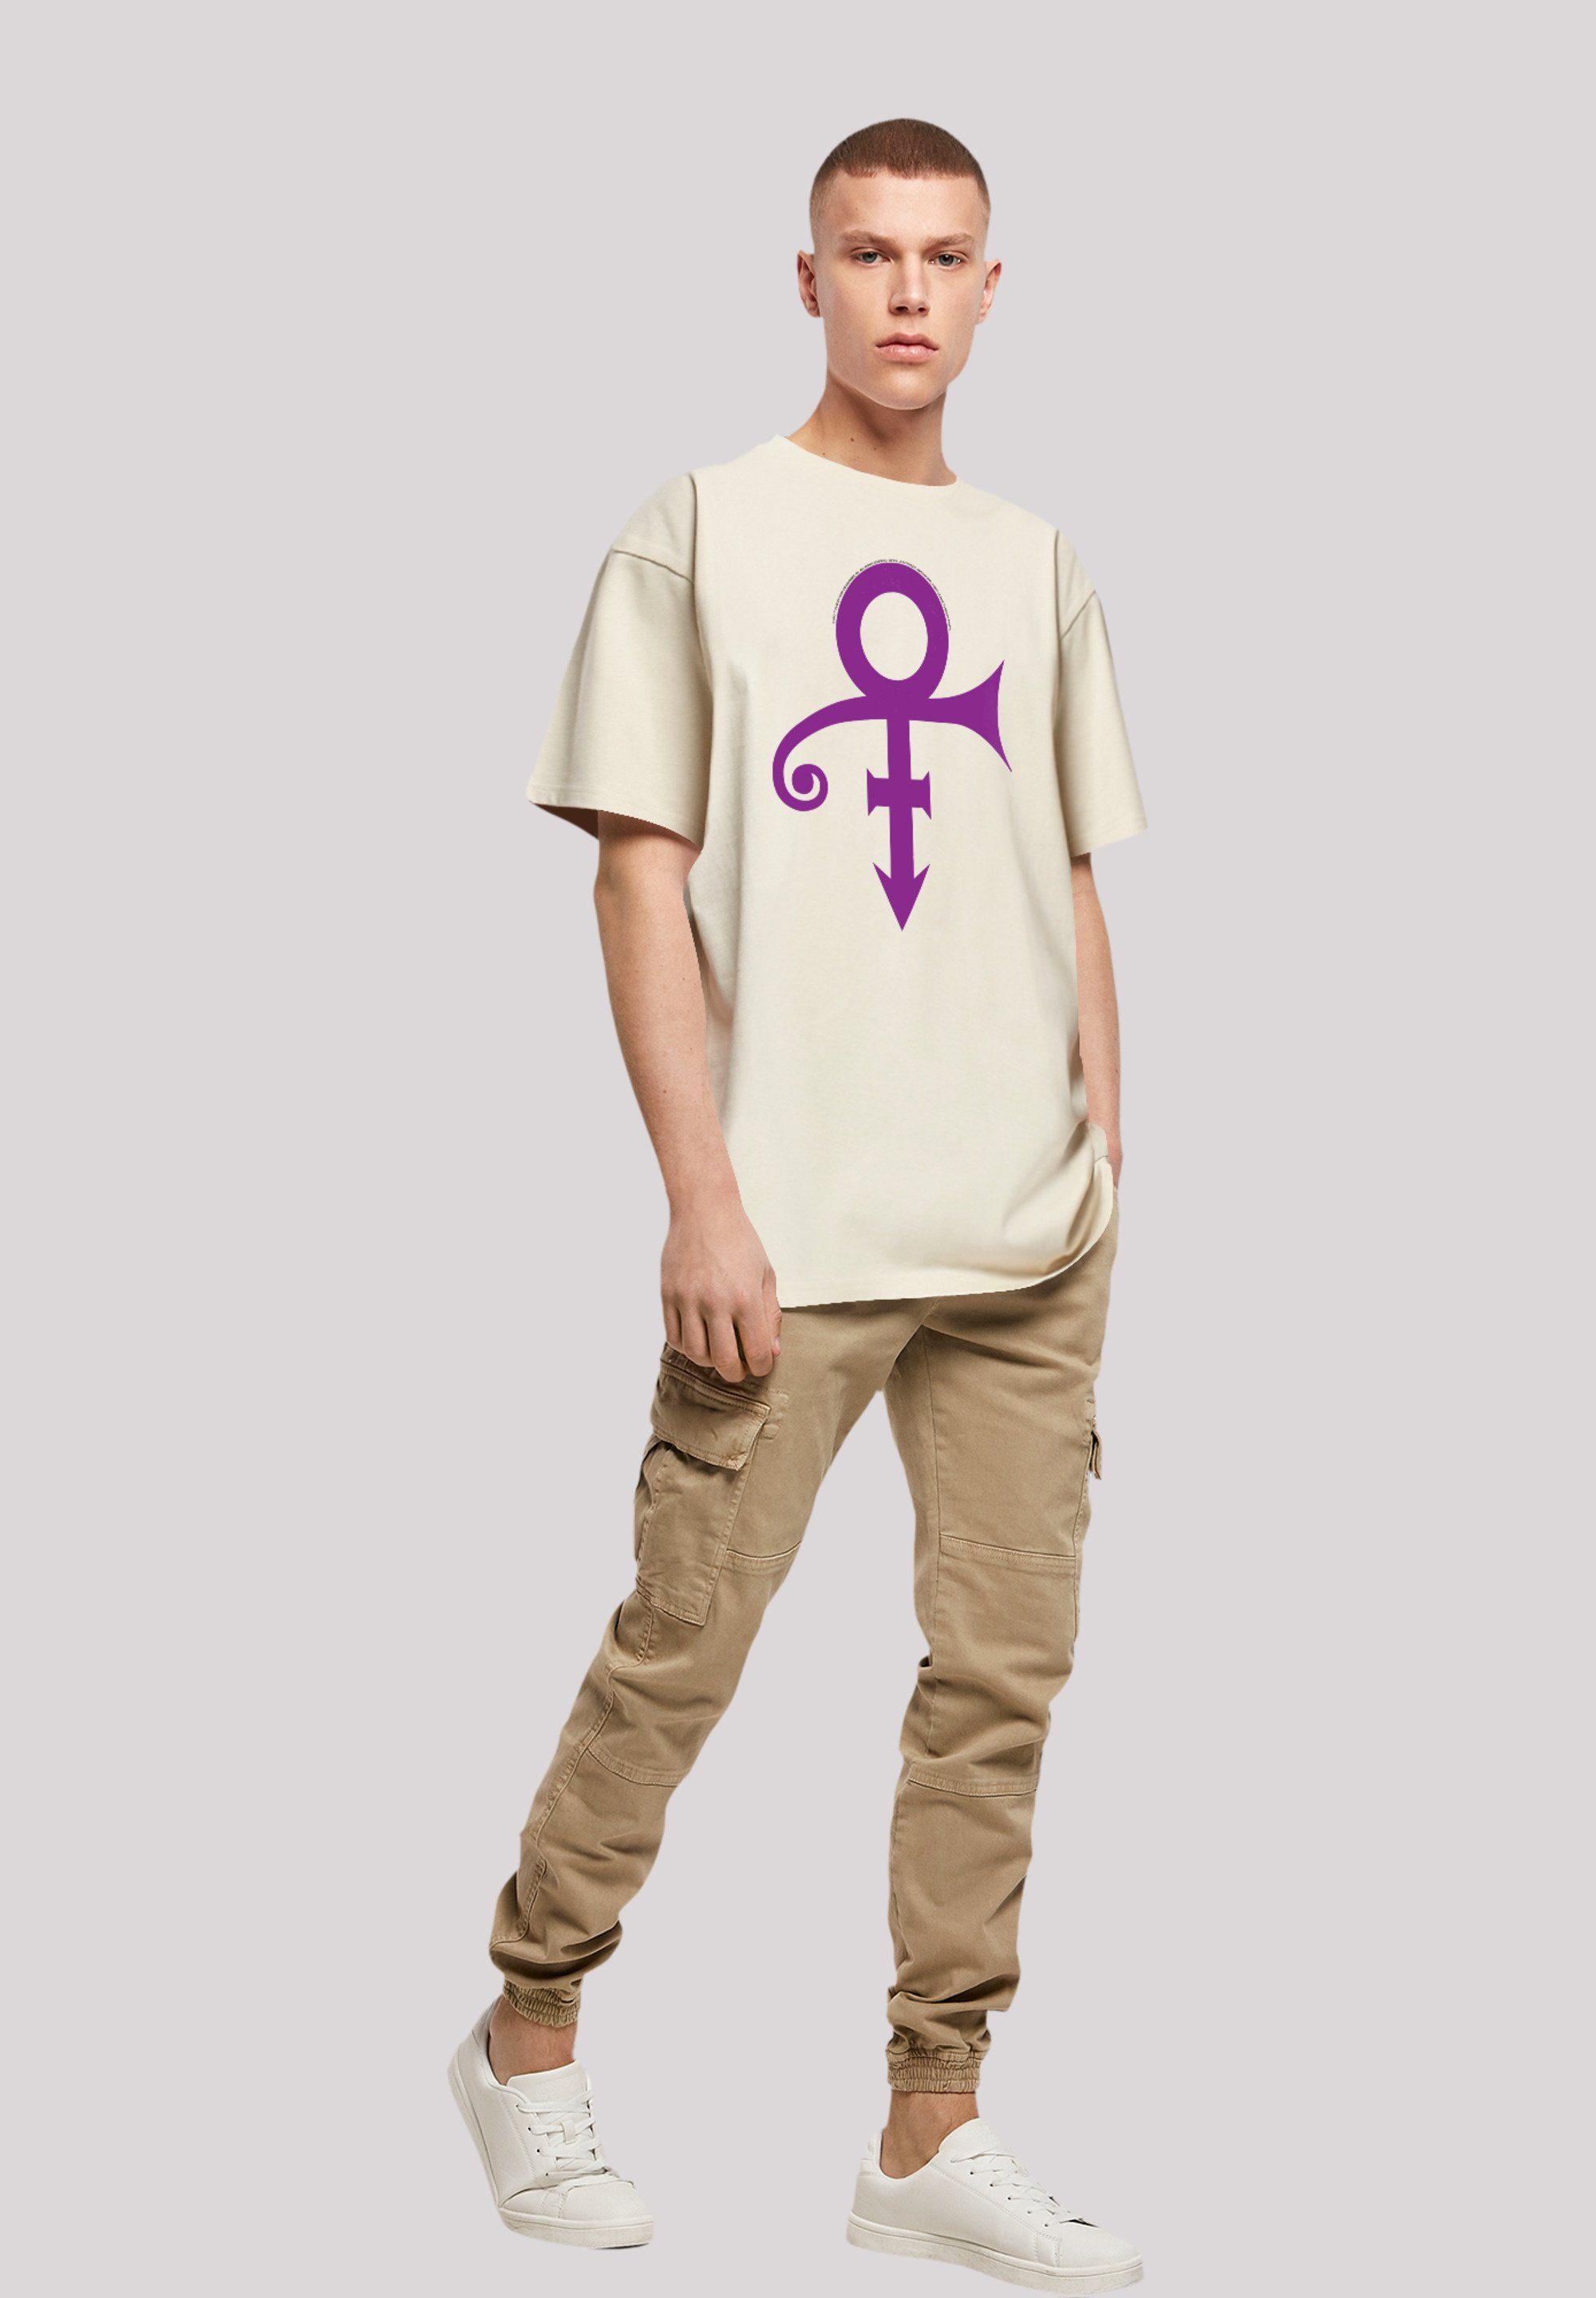 F4NT4STIC T-Shirt Prince Musik Logo Qualität, sand Band Rock-Musik, Premium Album